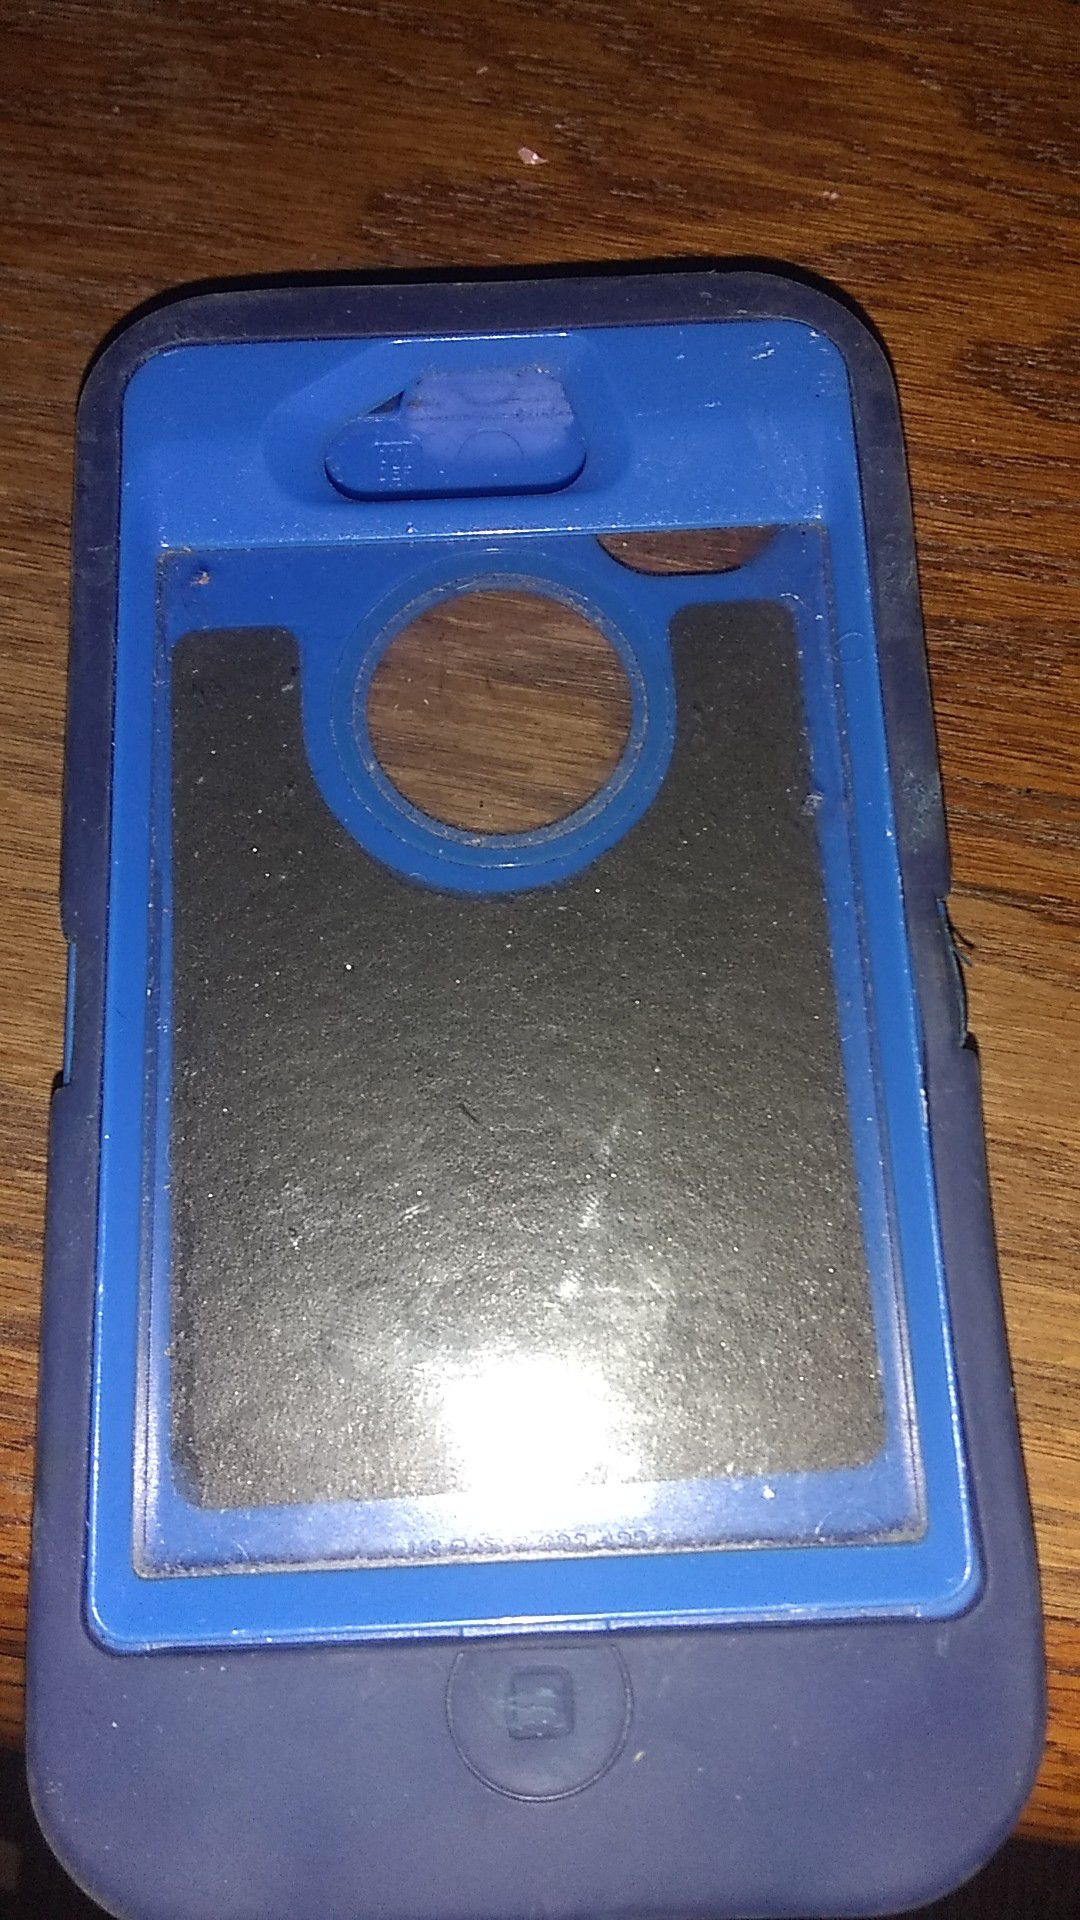 IPhone 4/5 Blue otter box case